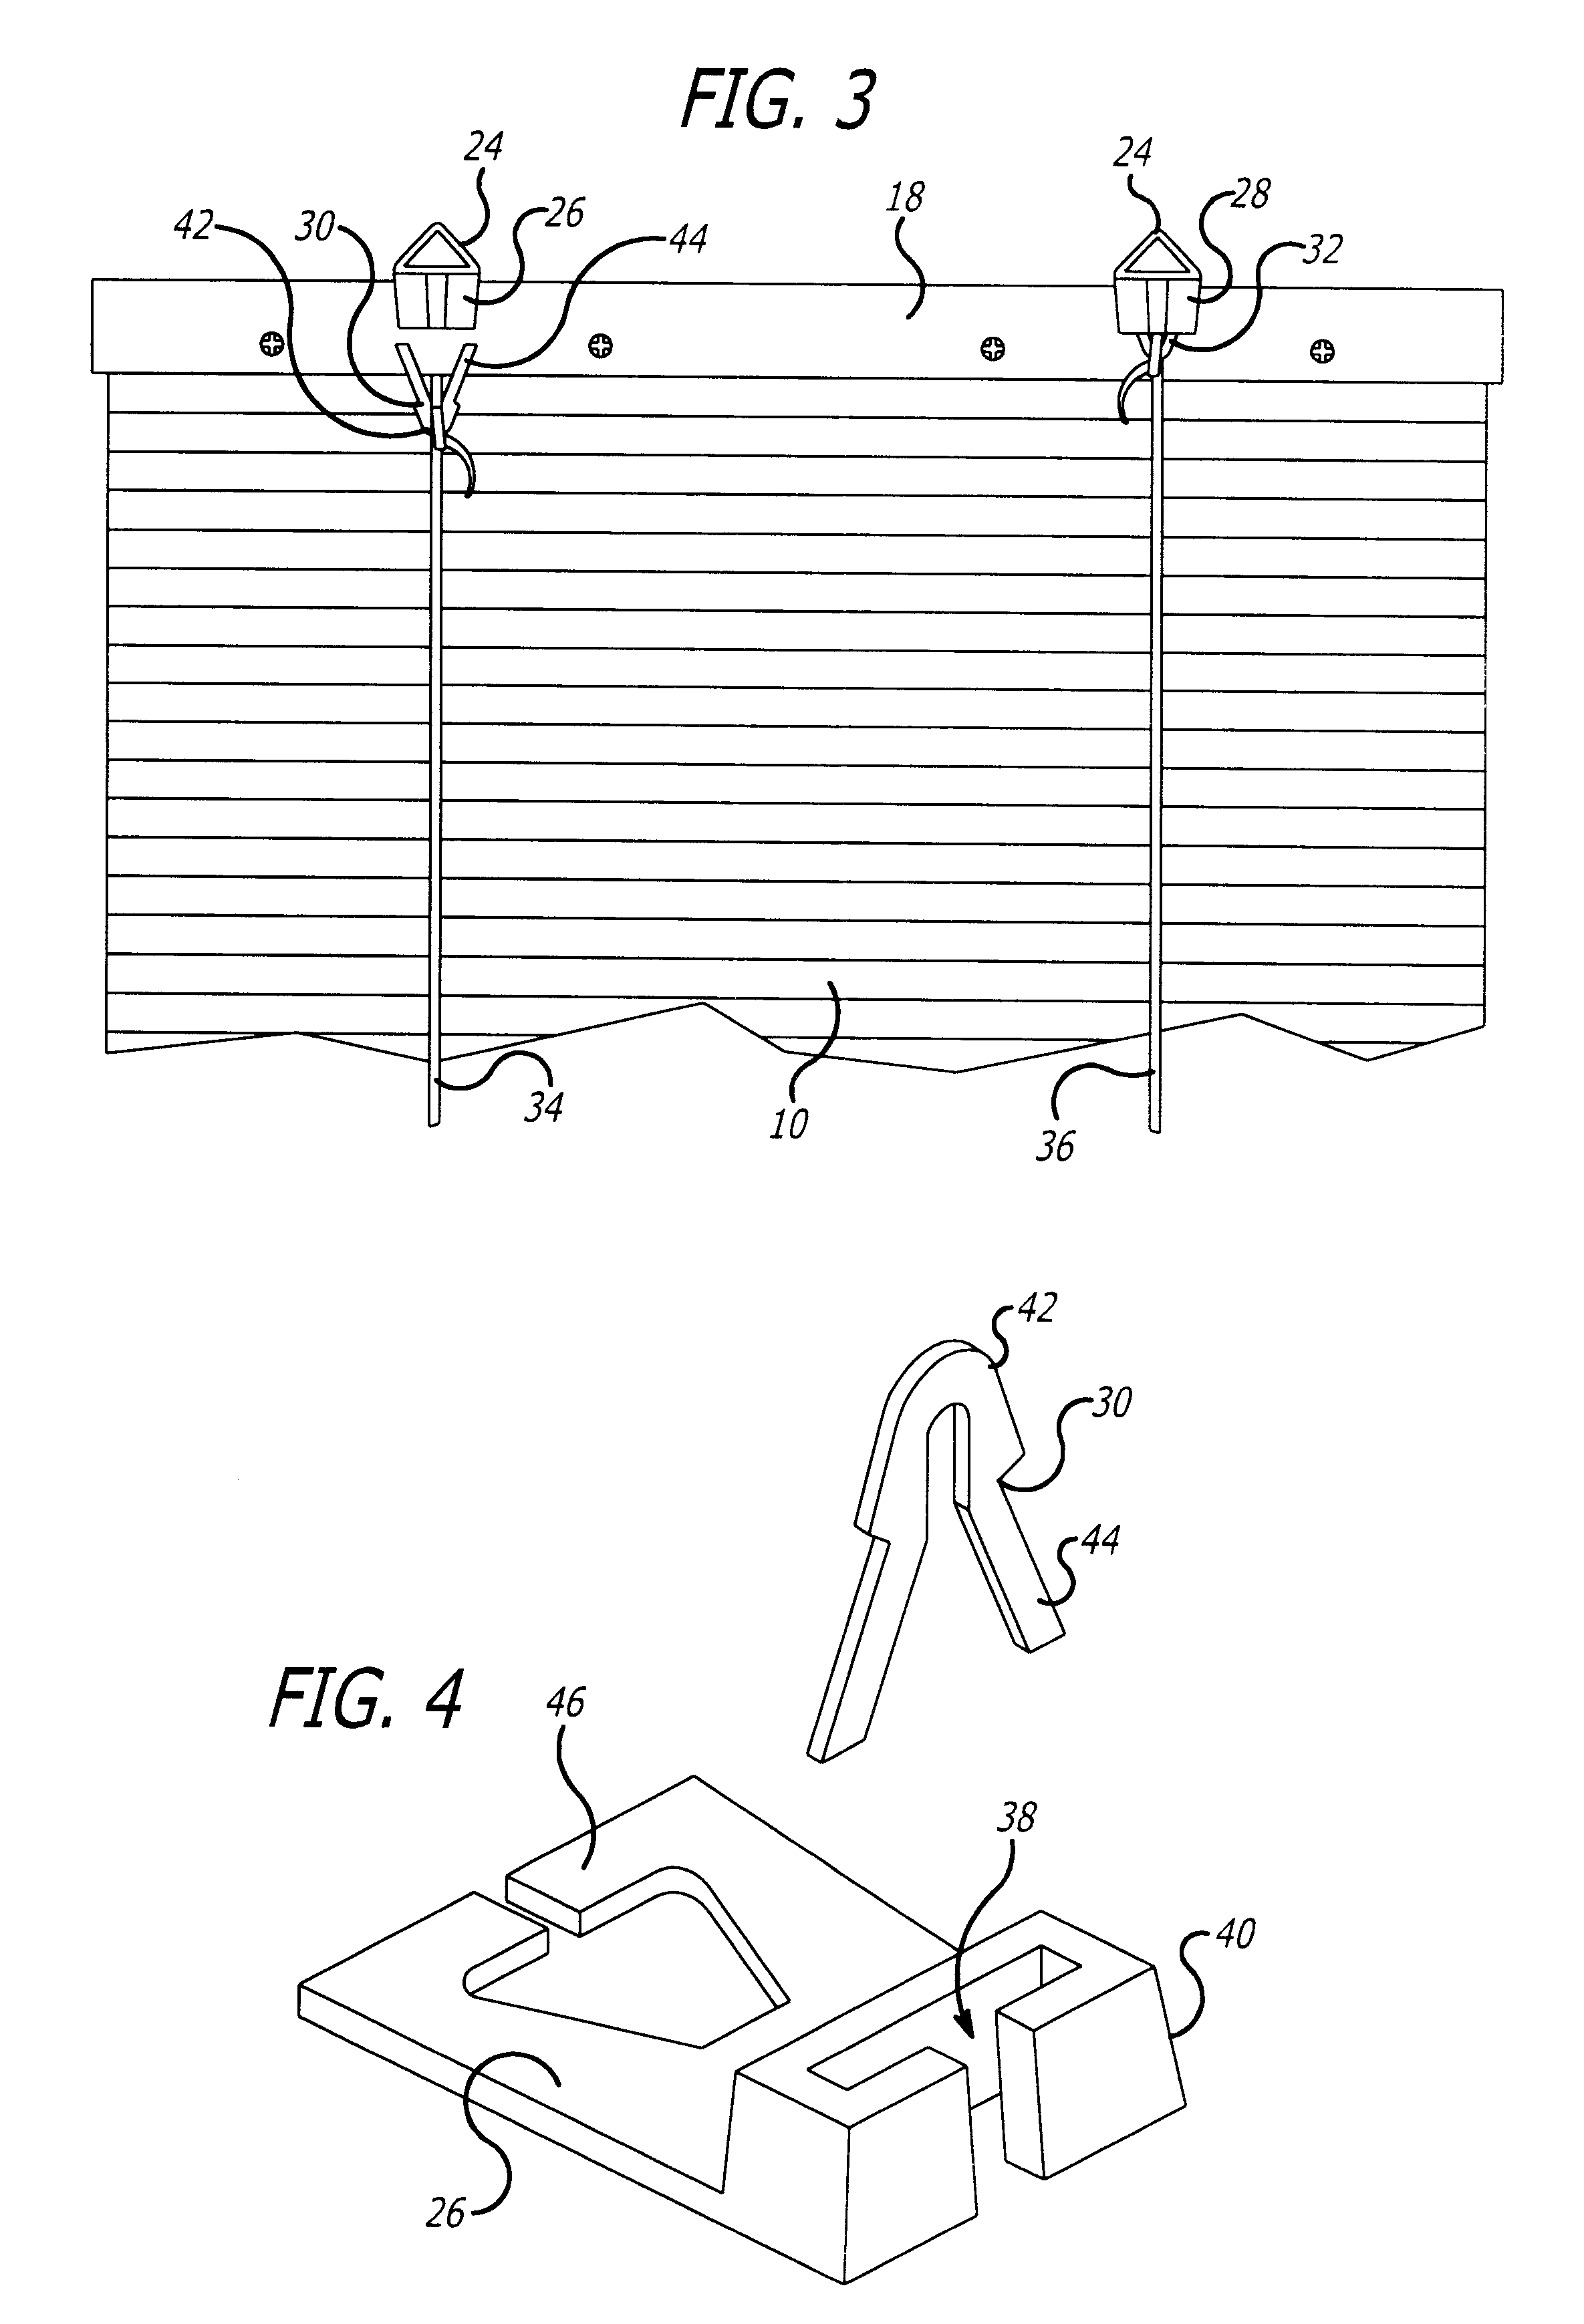 Releasable cord connection apparatus